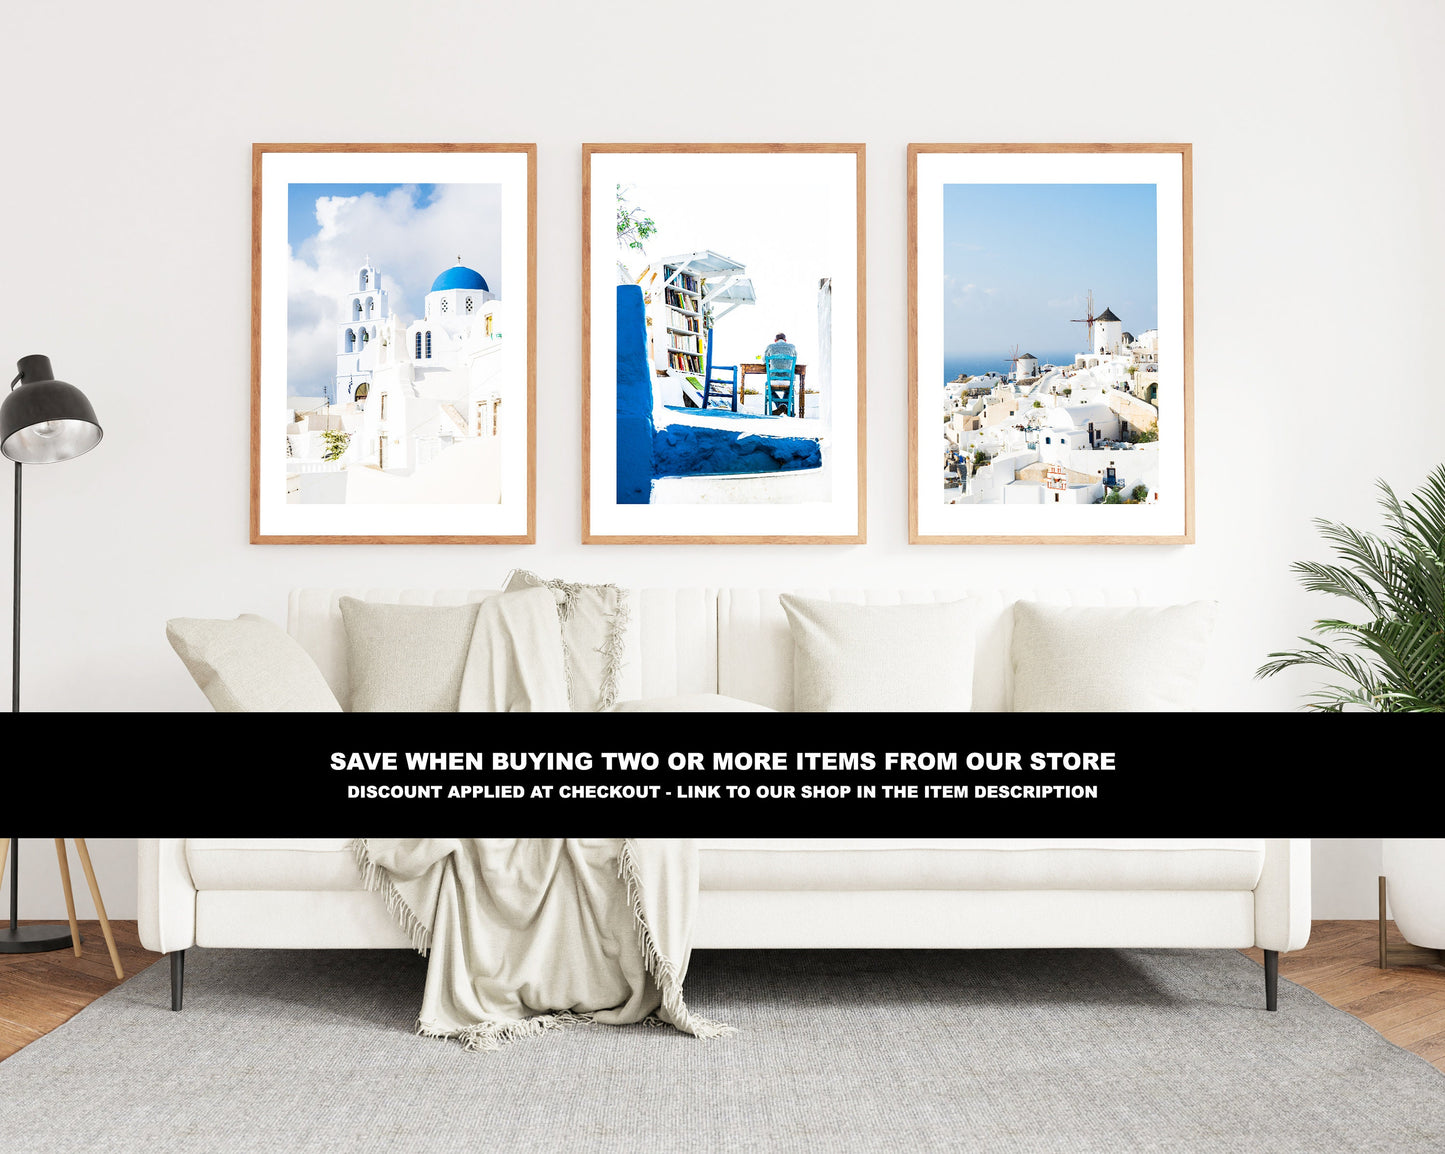 Greek Windmills - Photography Print - Greece - Print - Poster - Santorini Photography - Greece Wall Art - Black and White - Monochrome